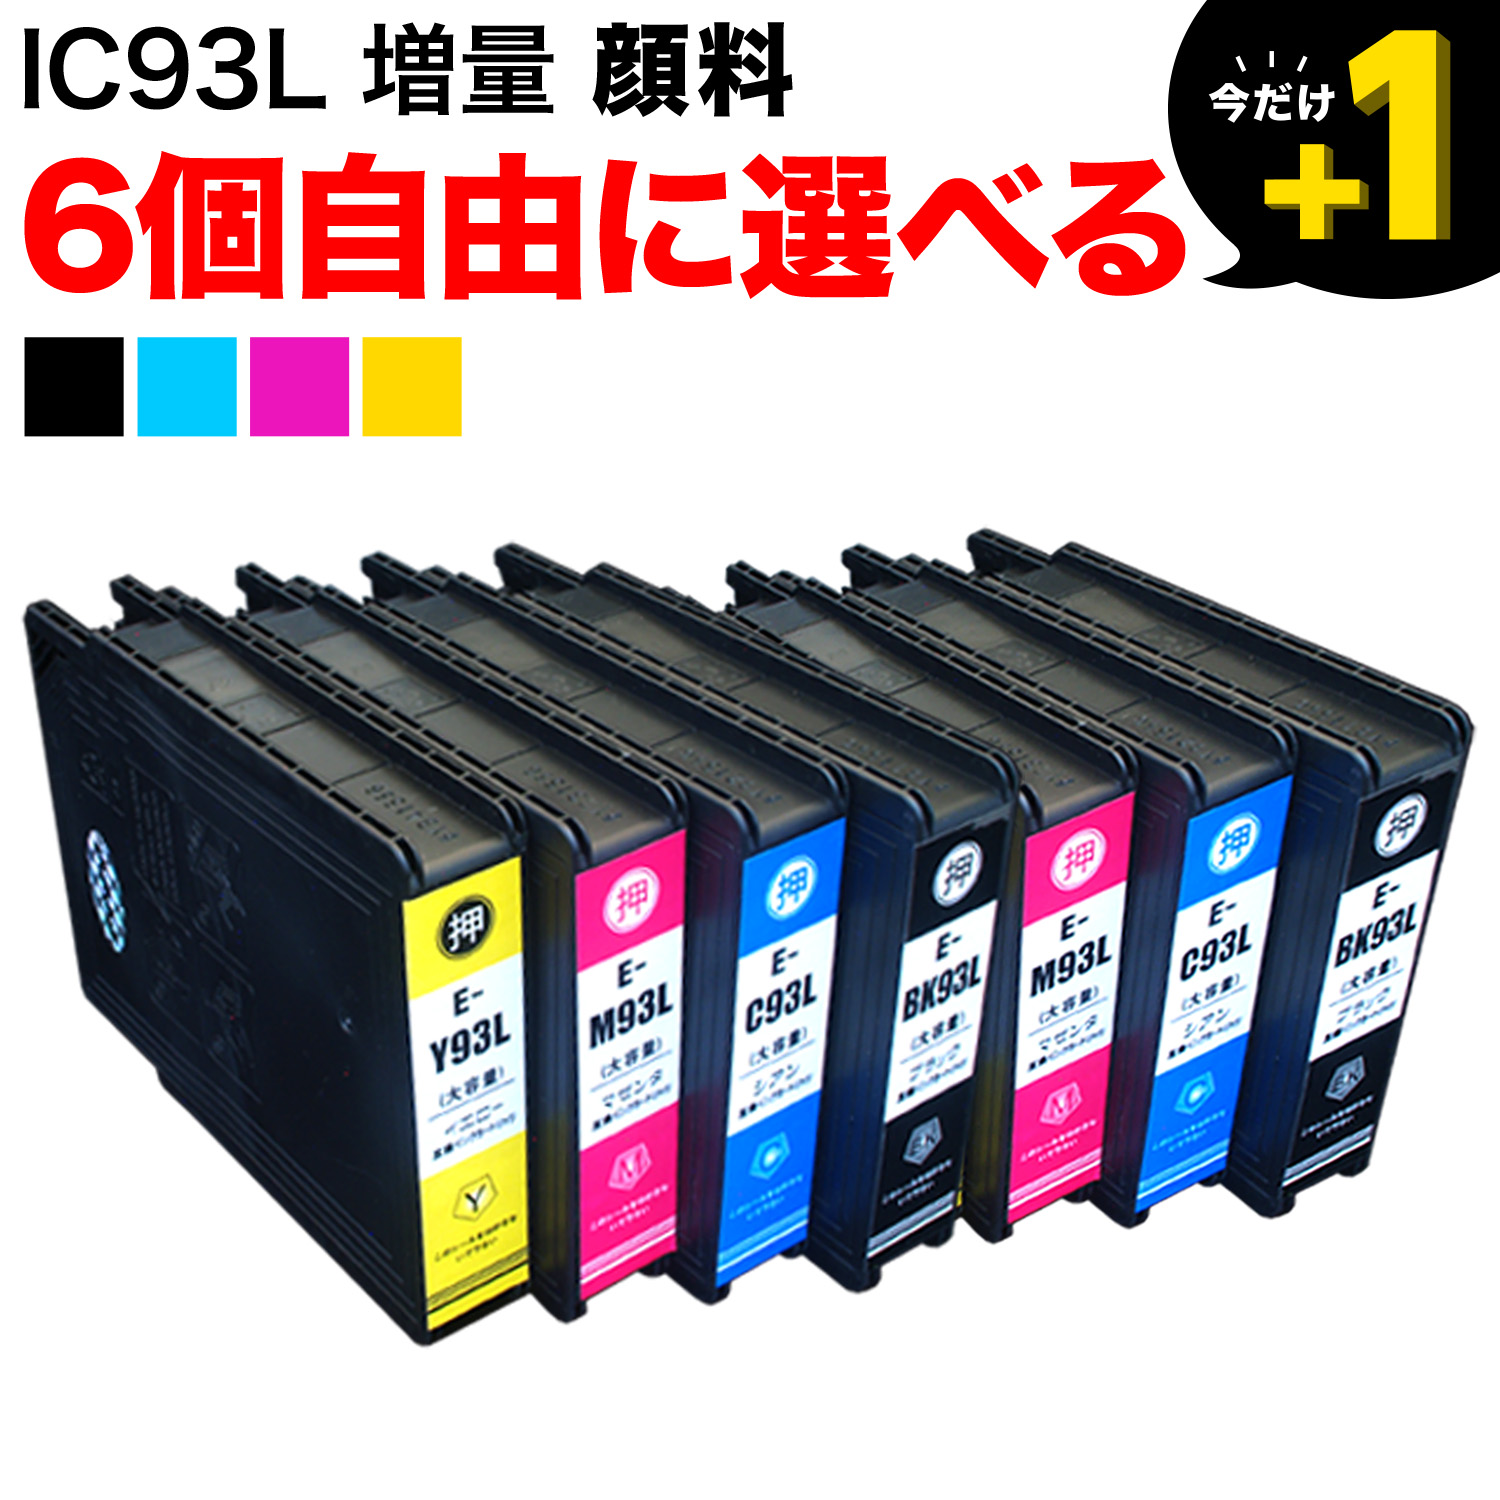 IC93L エプソン用 互換インク 顔料 増量 自由選択6個セット フリーチョイス【送料無料】 　選べる6個